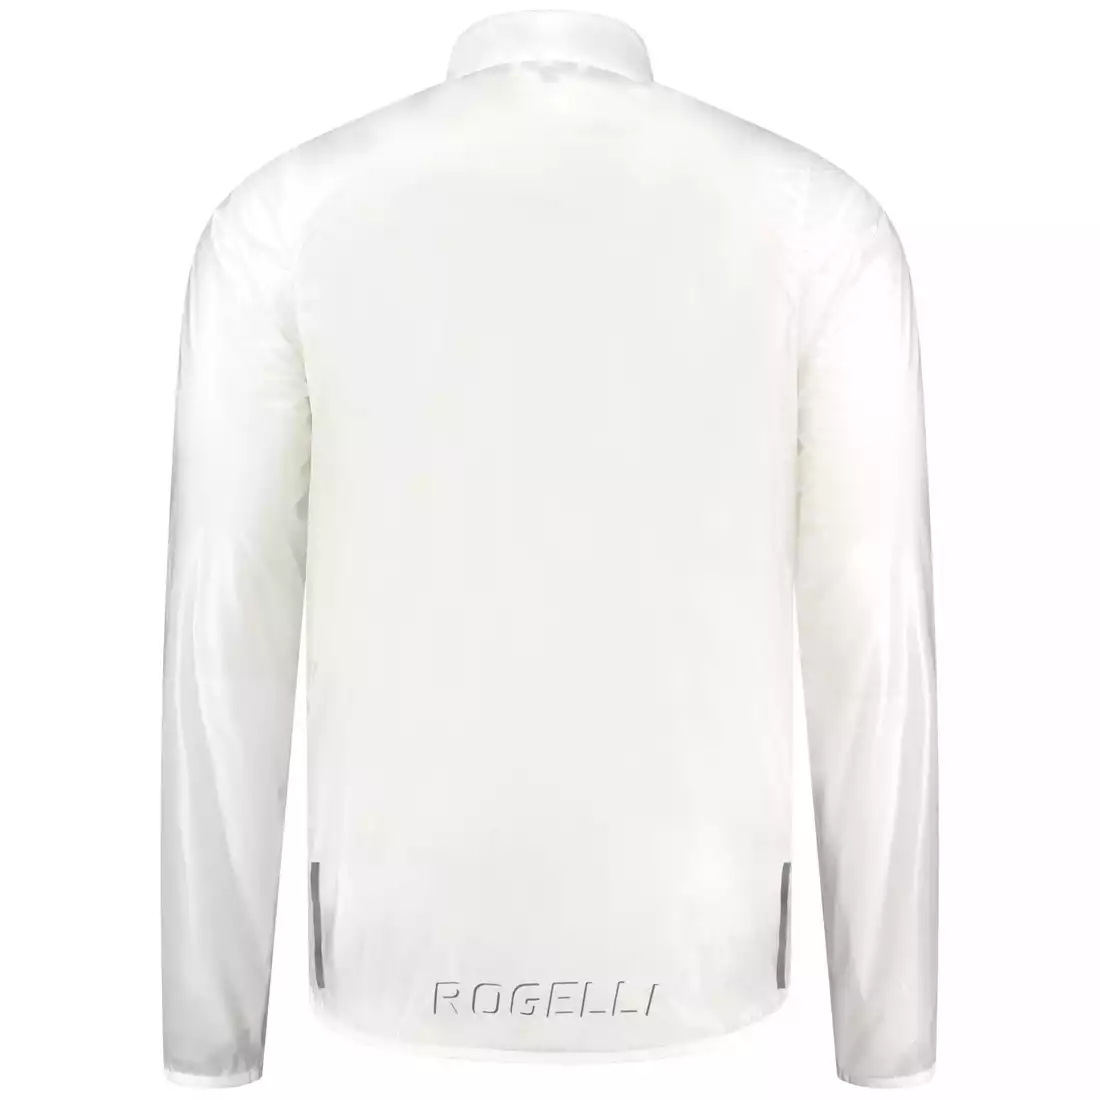 ROGELLI EMERGENCY men's rain jacket, white, transparent